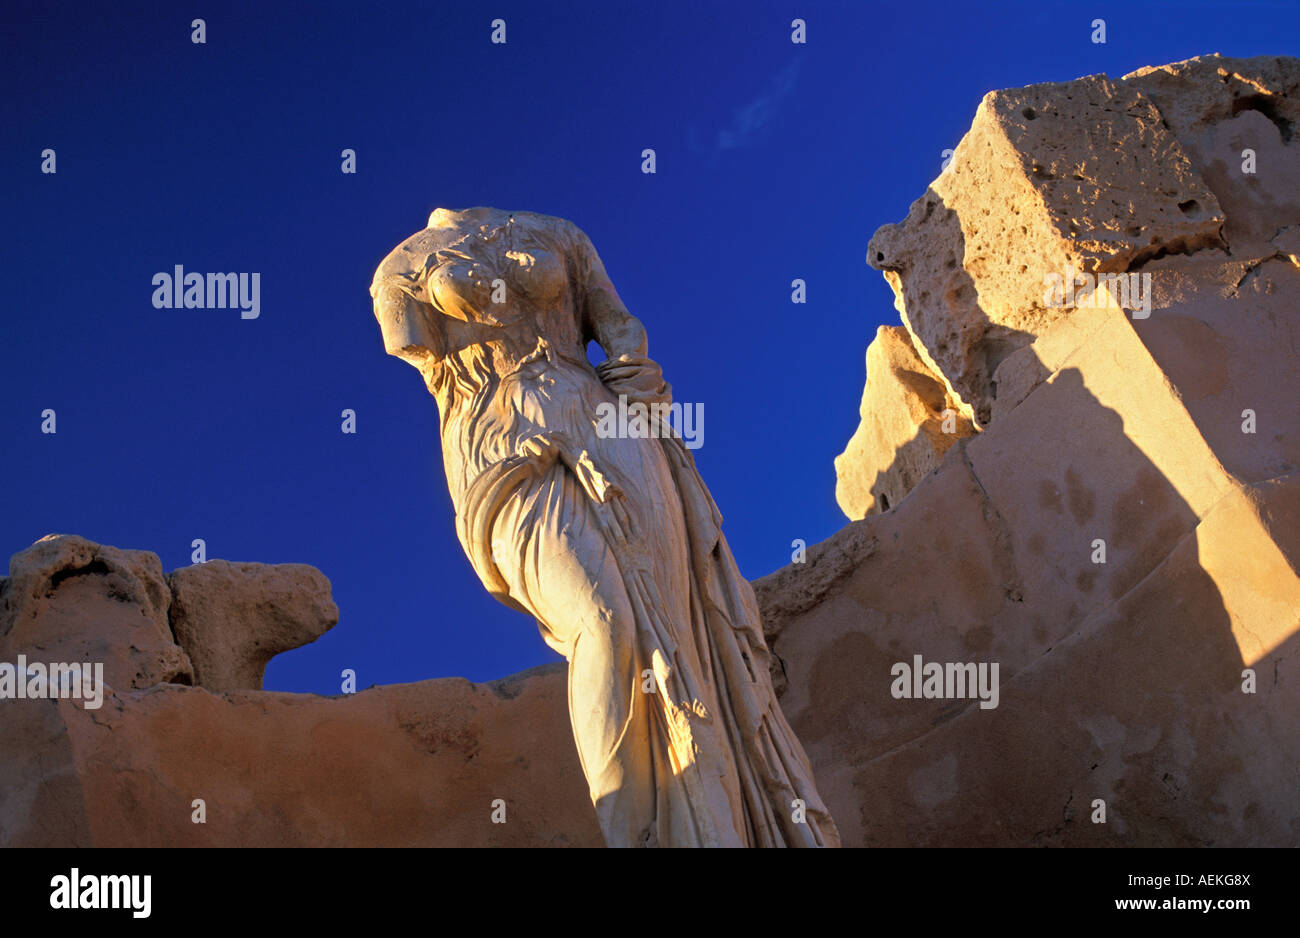 Libya Sabratha Roman Ruins Statue Stock Photo